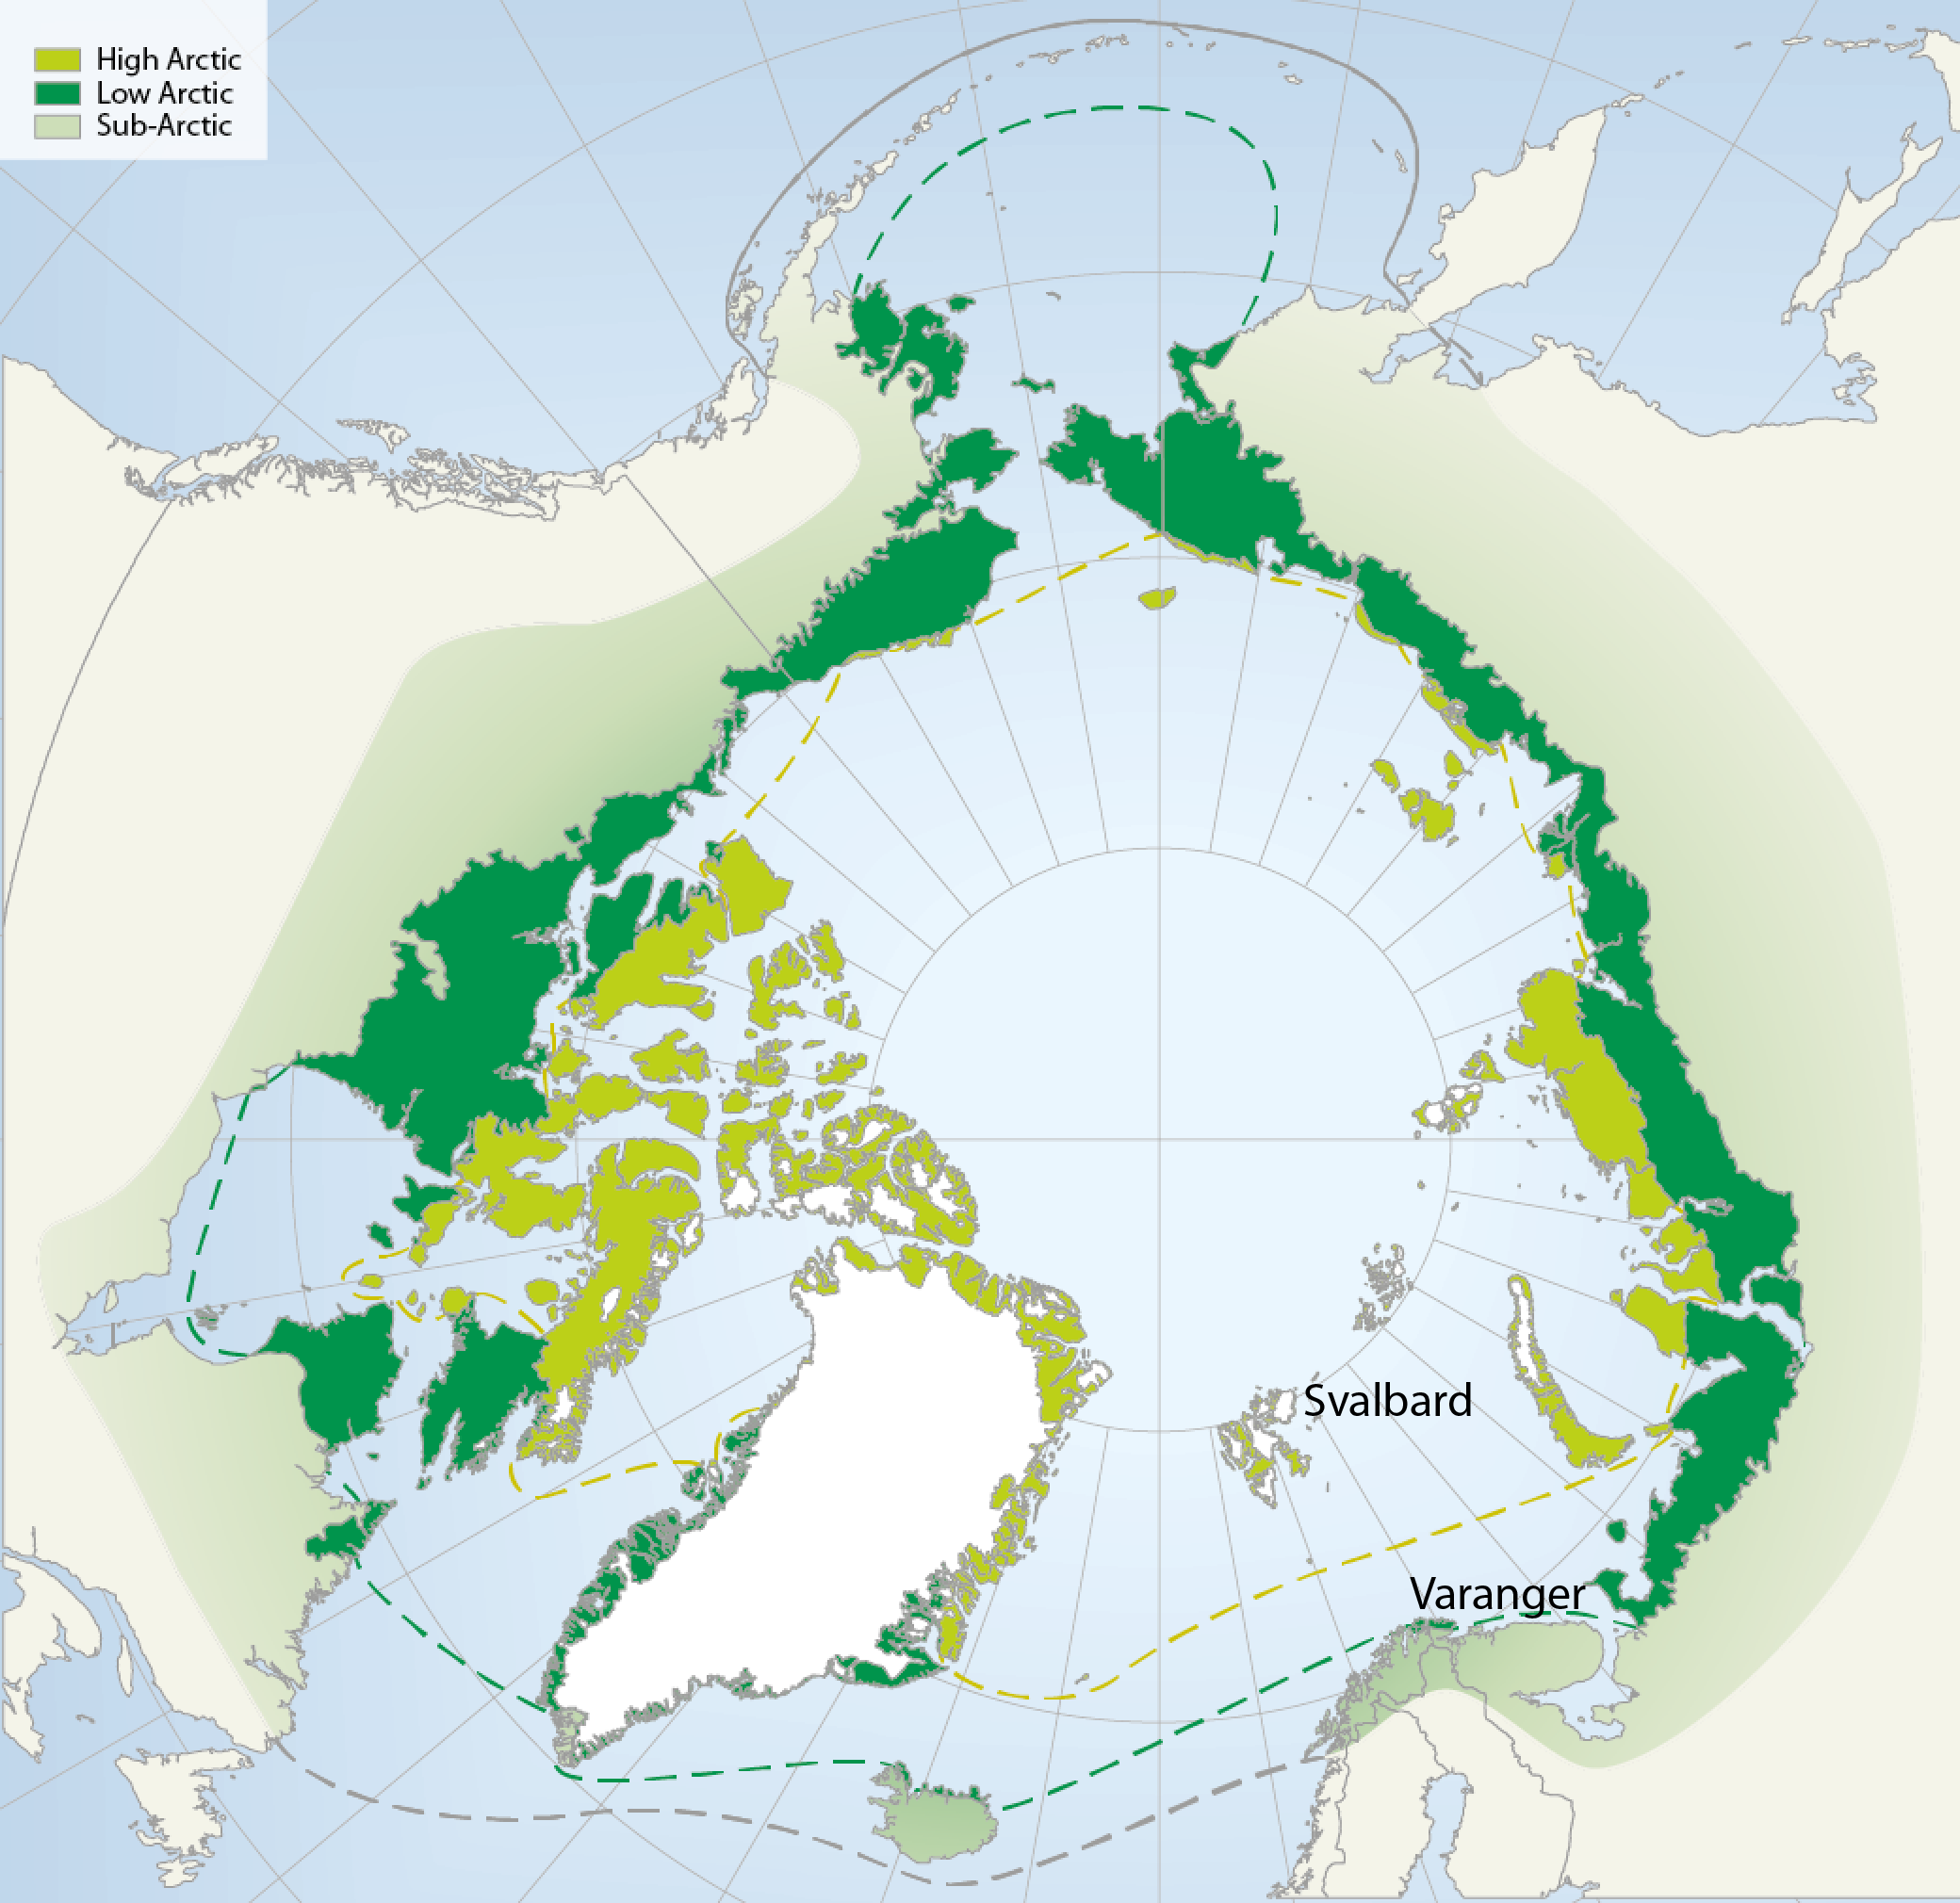 Map source: The Arctic Biodiversity Data Service